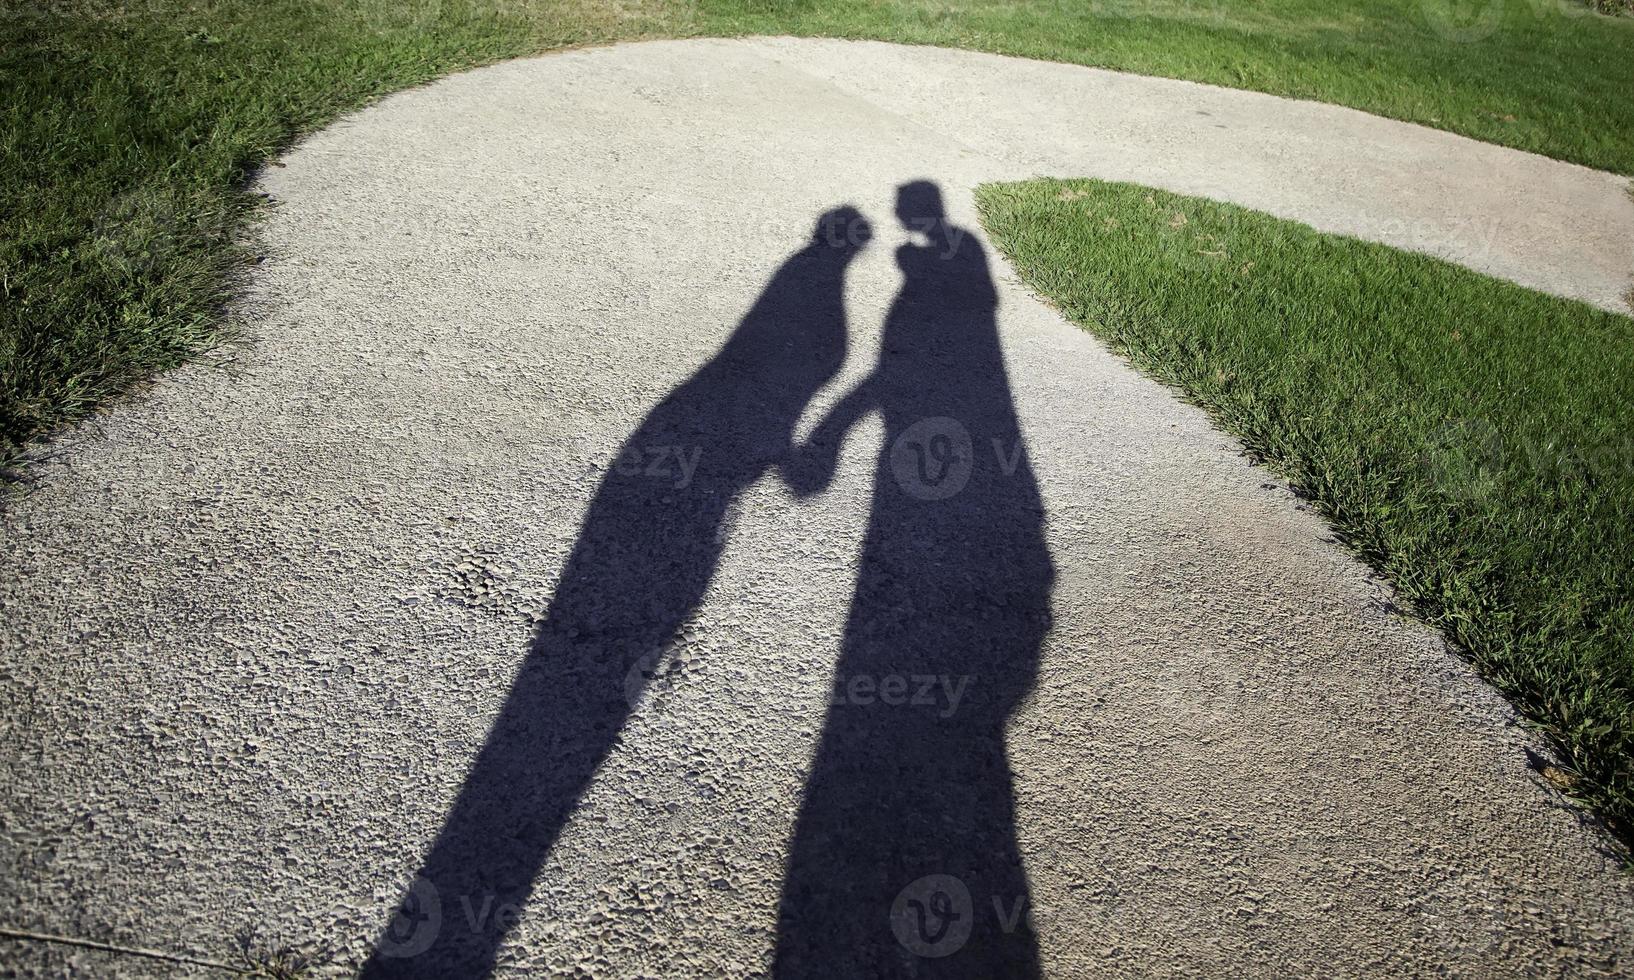 sombras de pareja enamorada 2858185 Foto de stock en Vecteezy